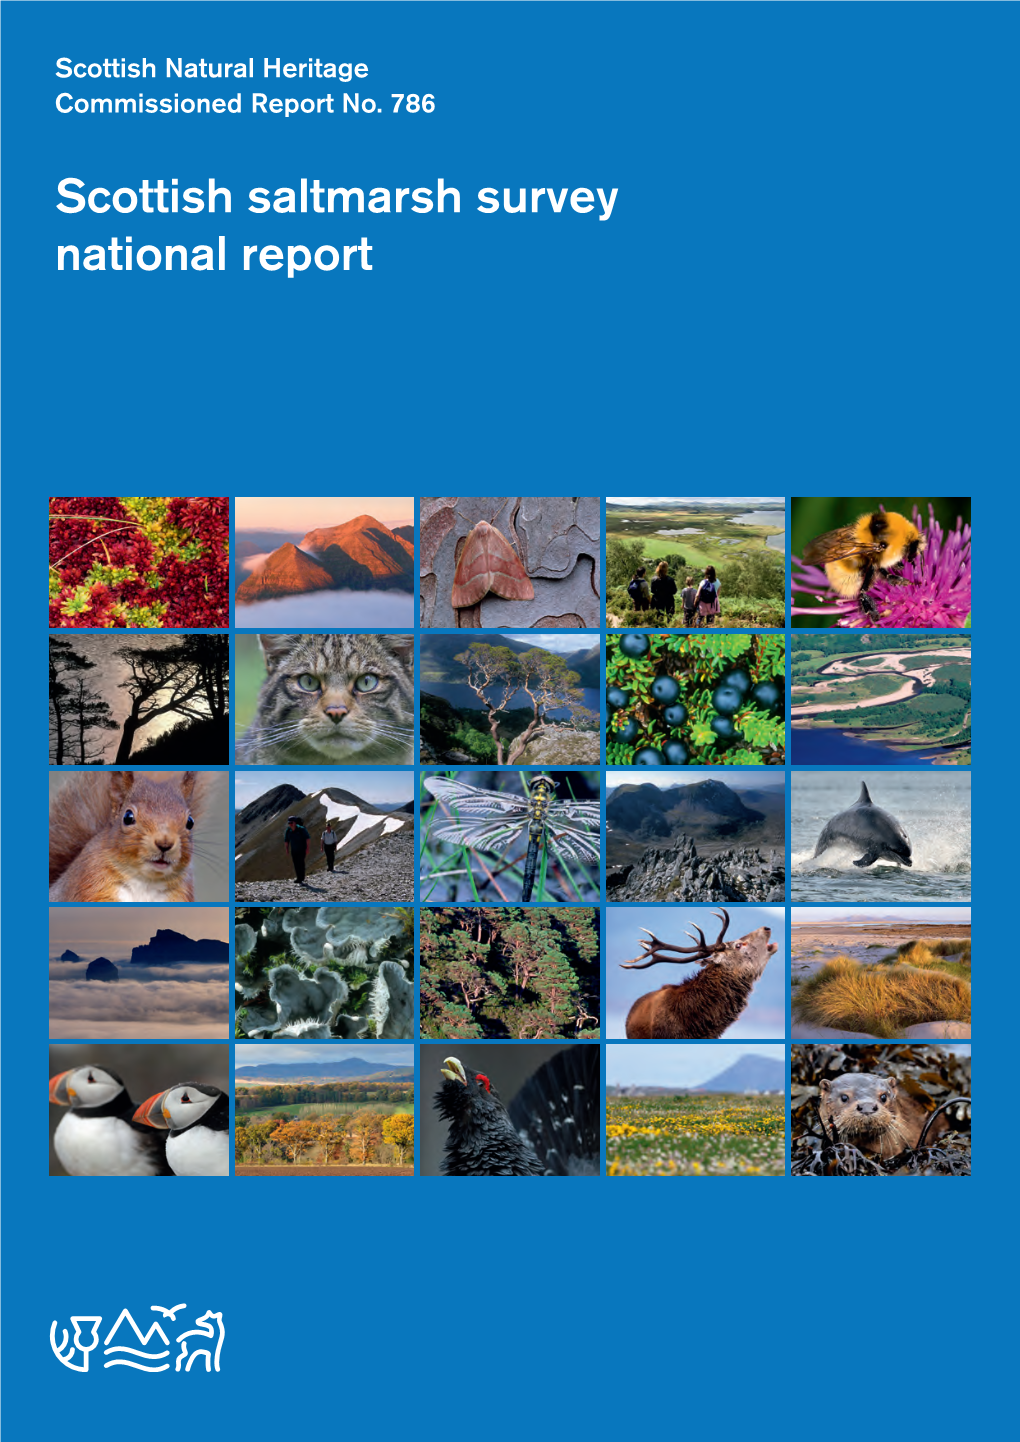 Scottish Saltmarsh Survey National Report (SNH)